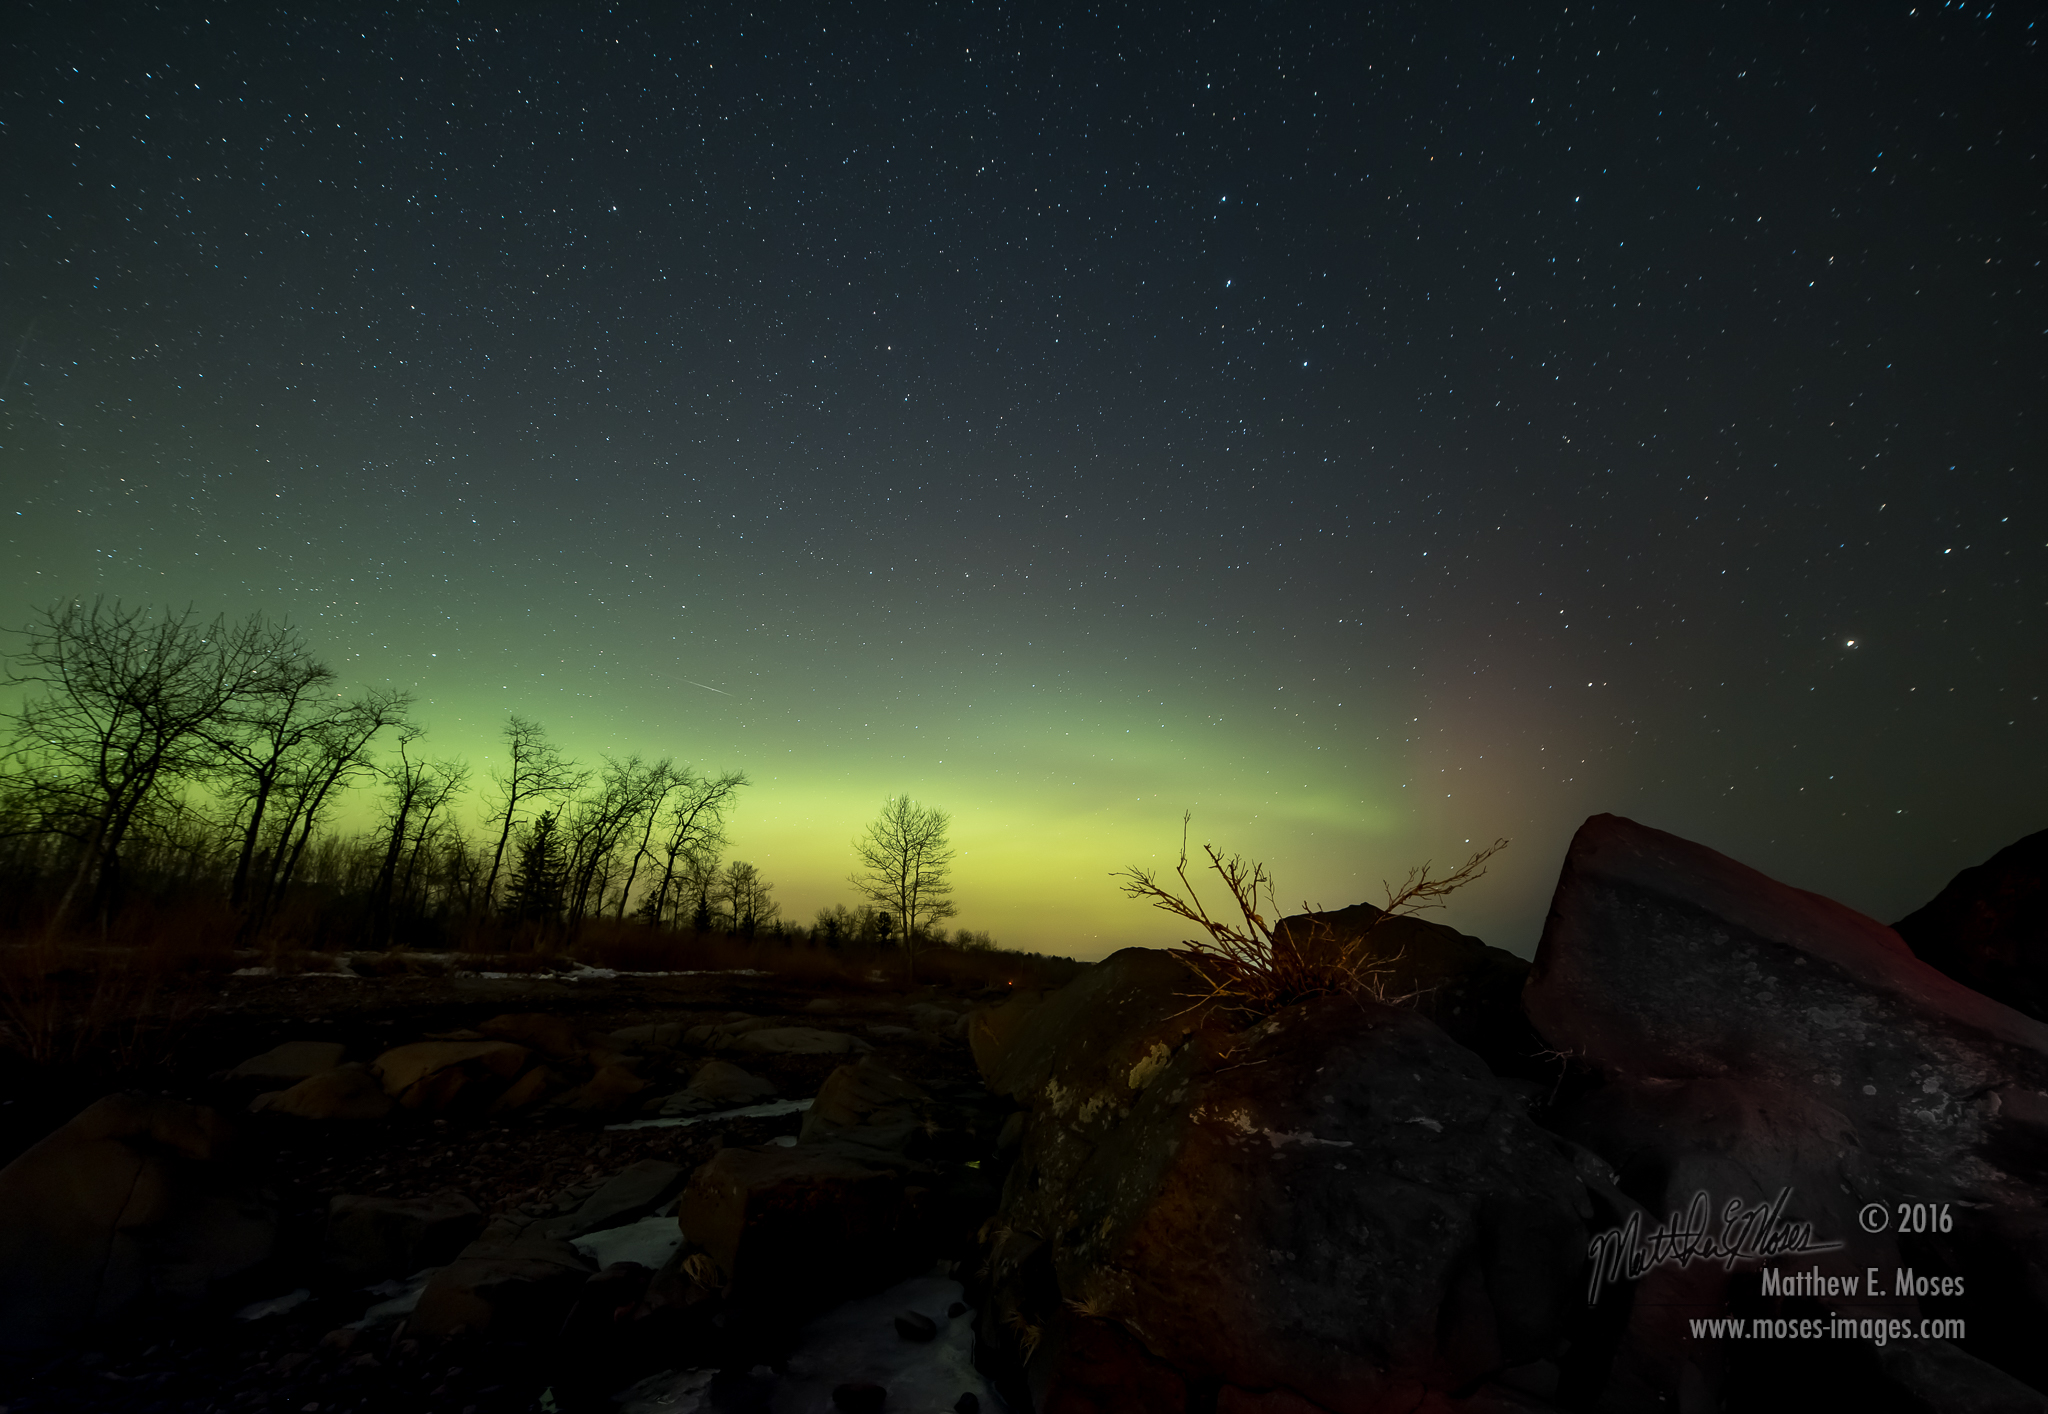 Green Aurora Lights Up the Minnesota Night in Skywatcher Photo